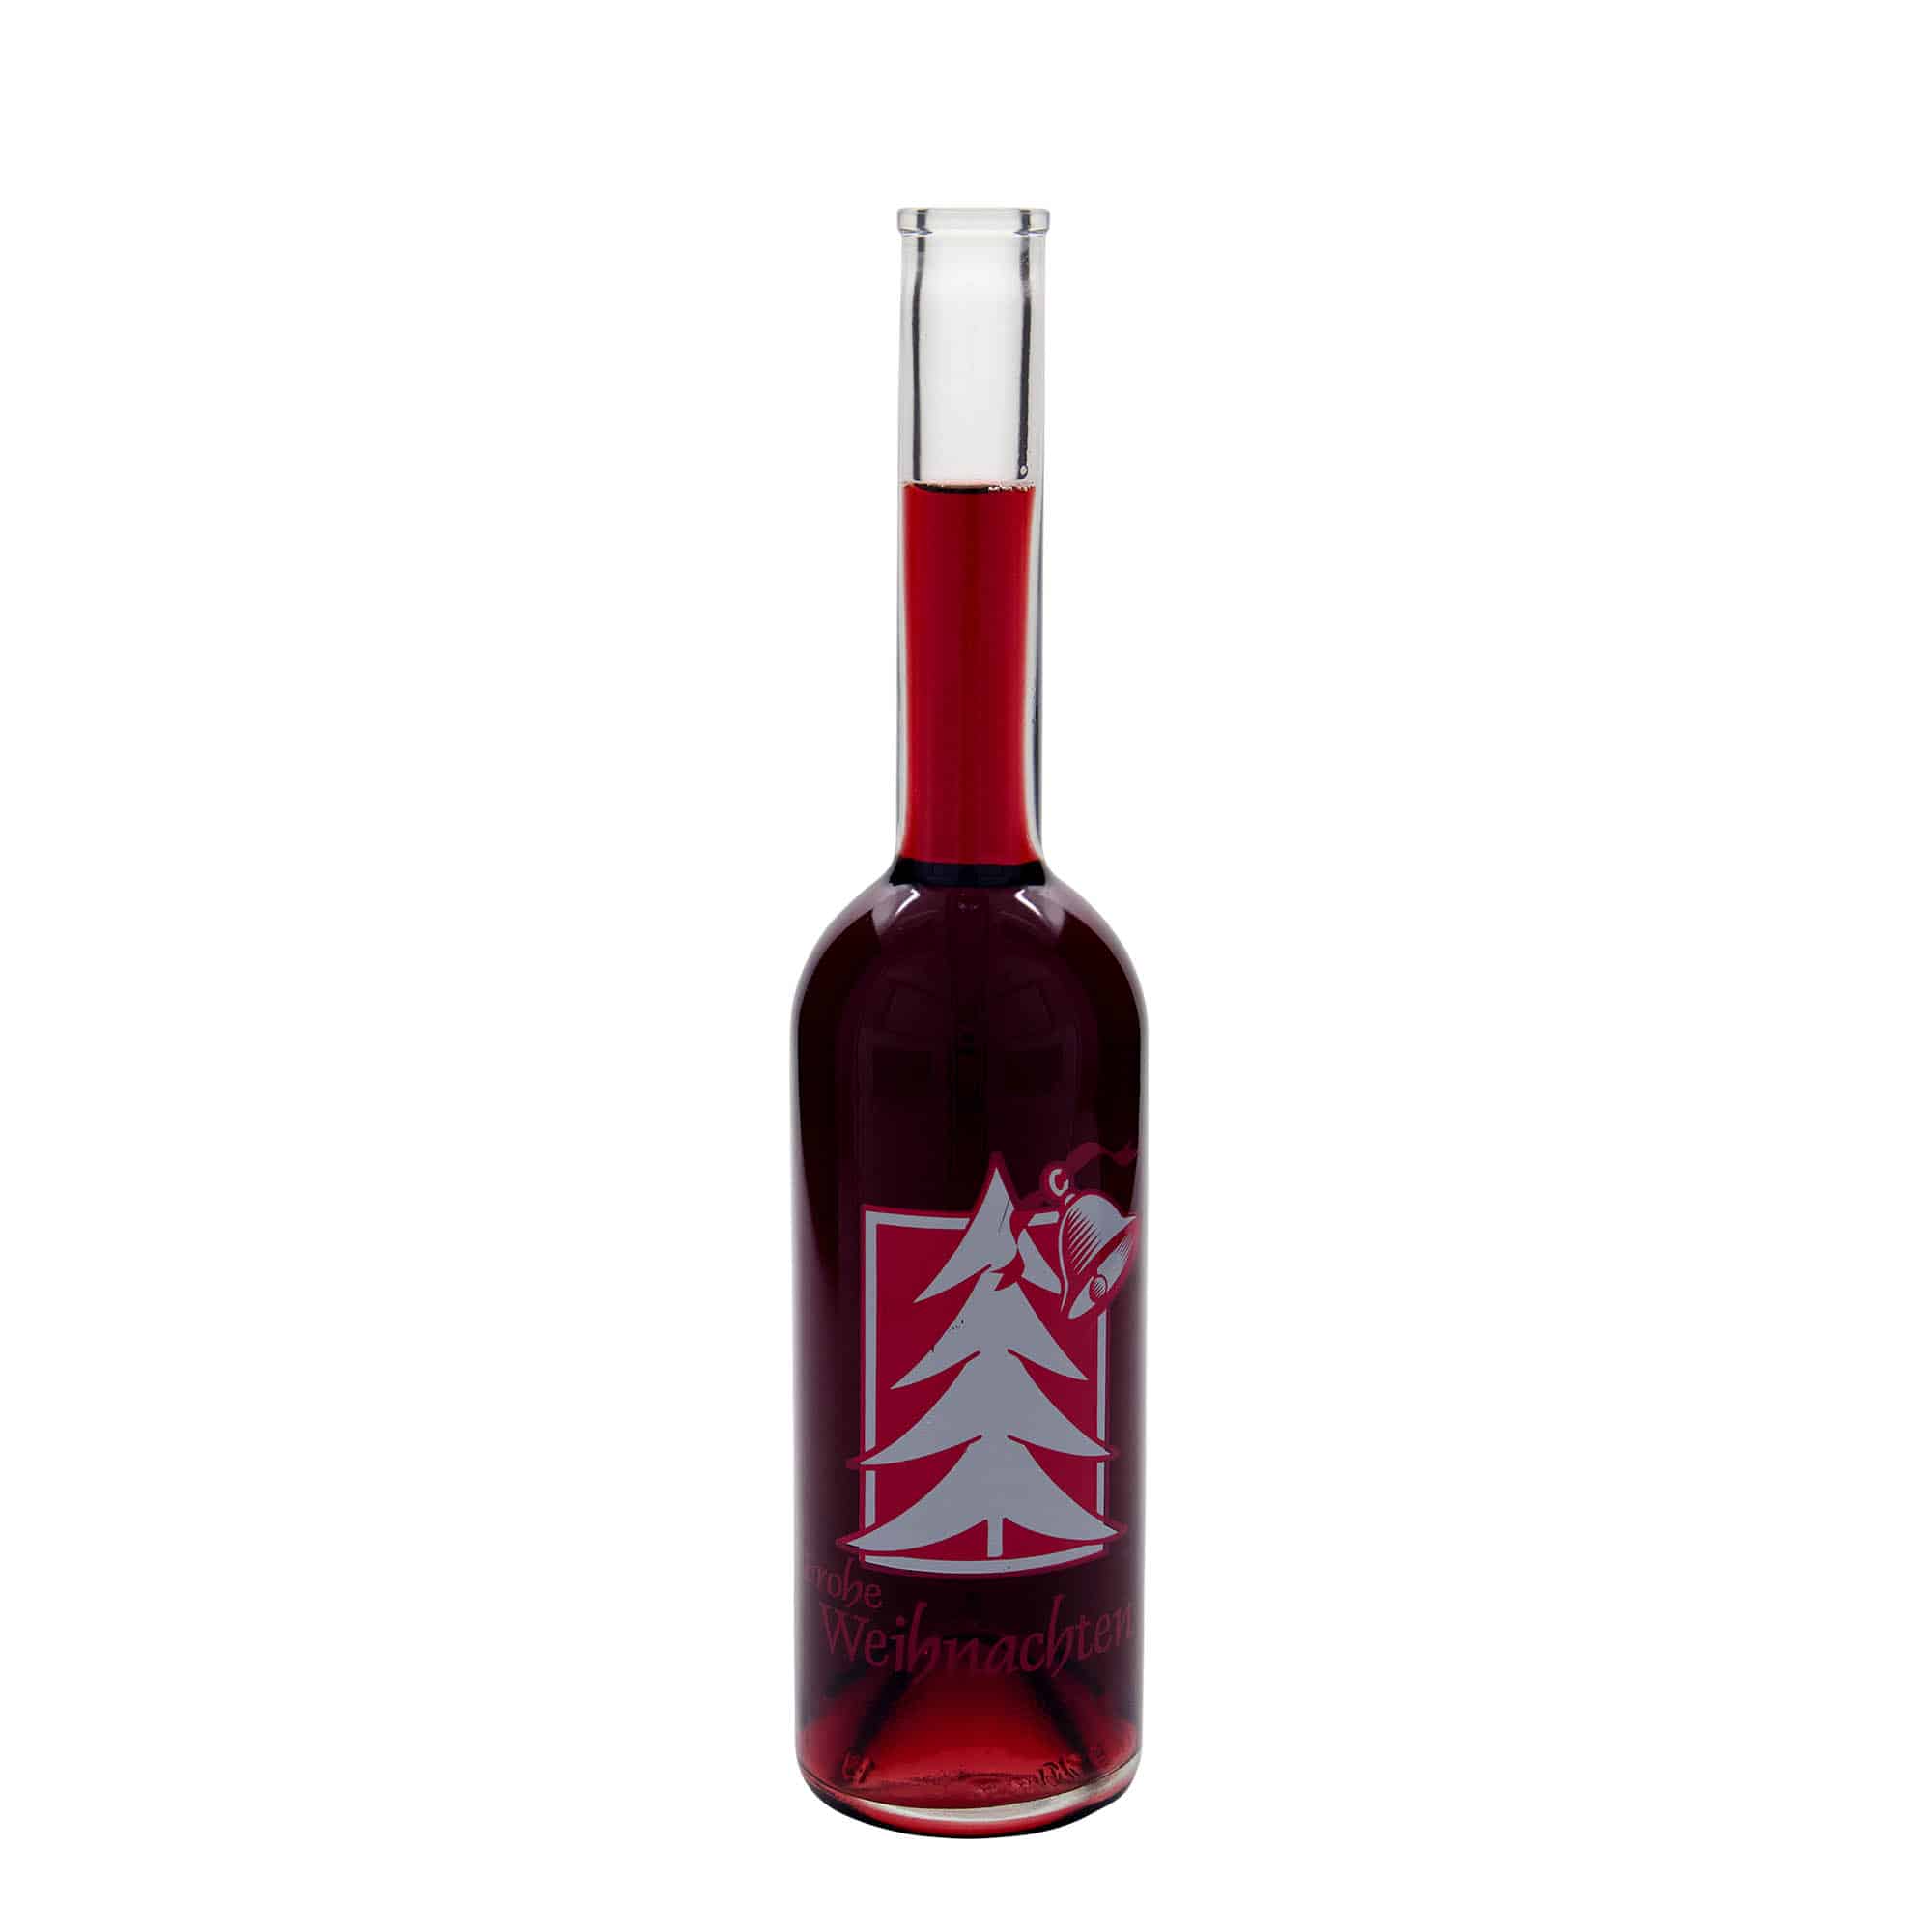 500 ml glass bottle 'Opera', print: Christmas greetings, closure: cork